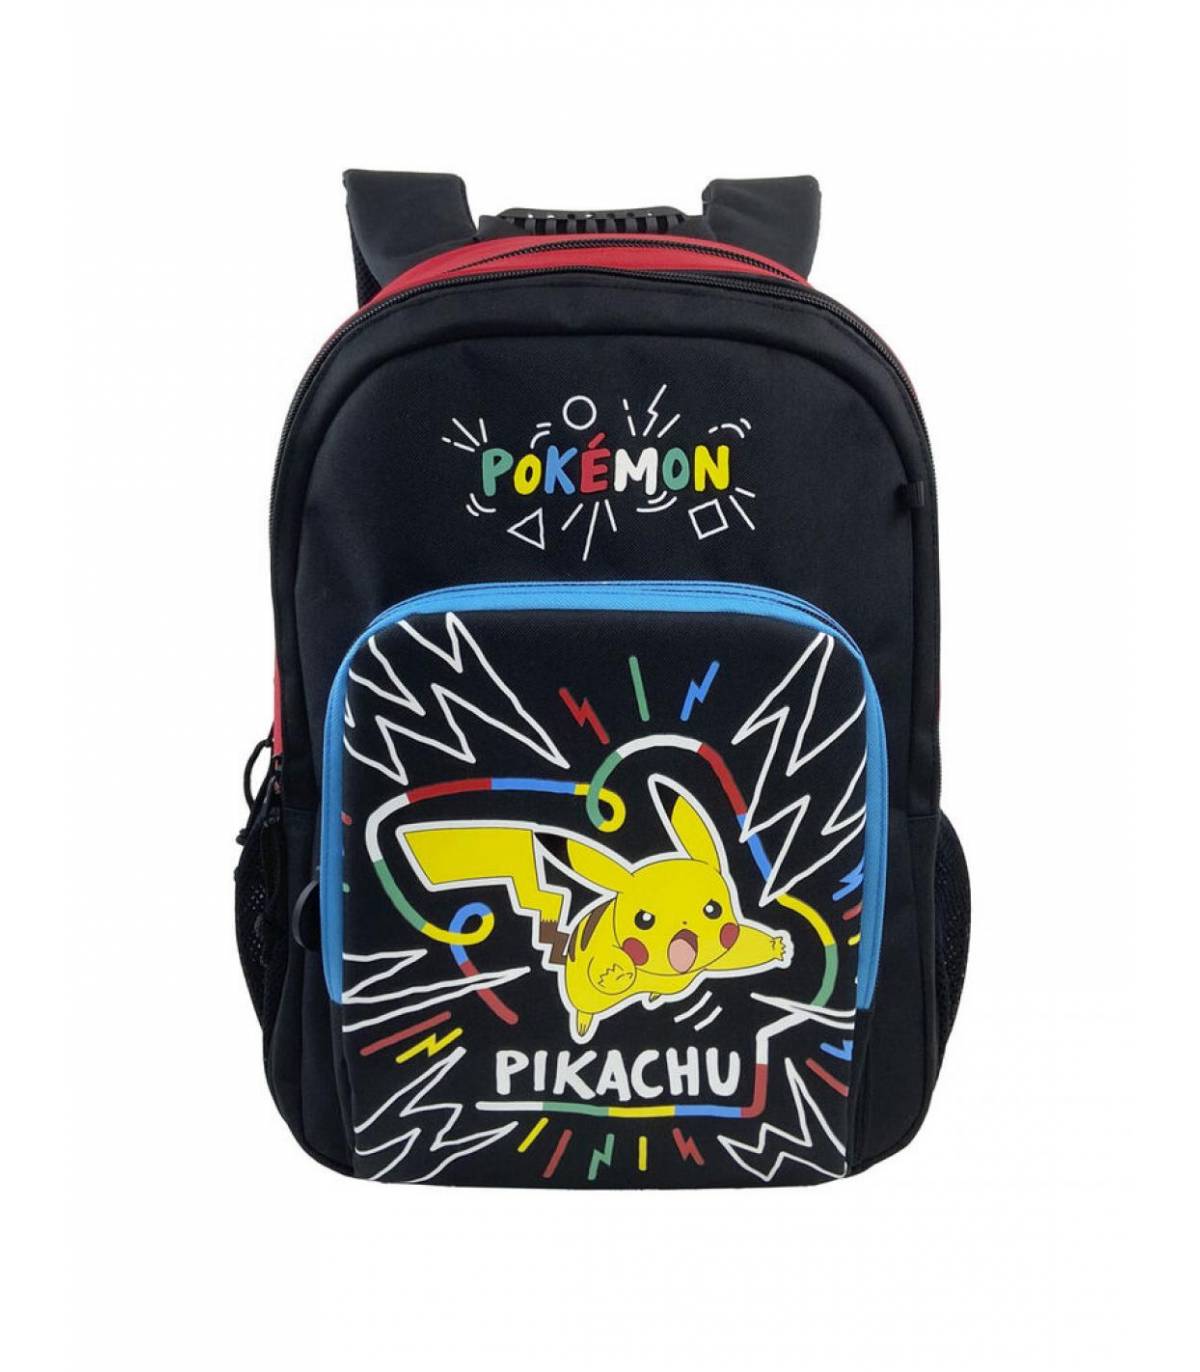 Mochila Pikachu Pokemon 42cm adaptable